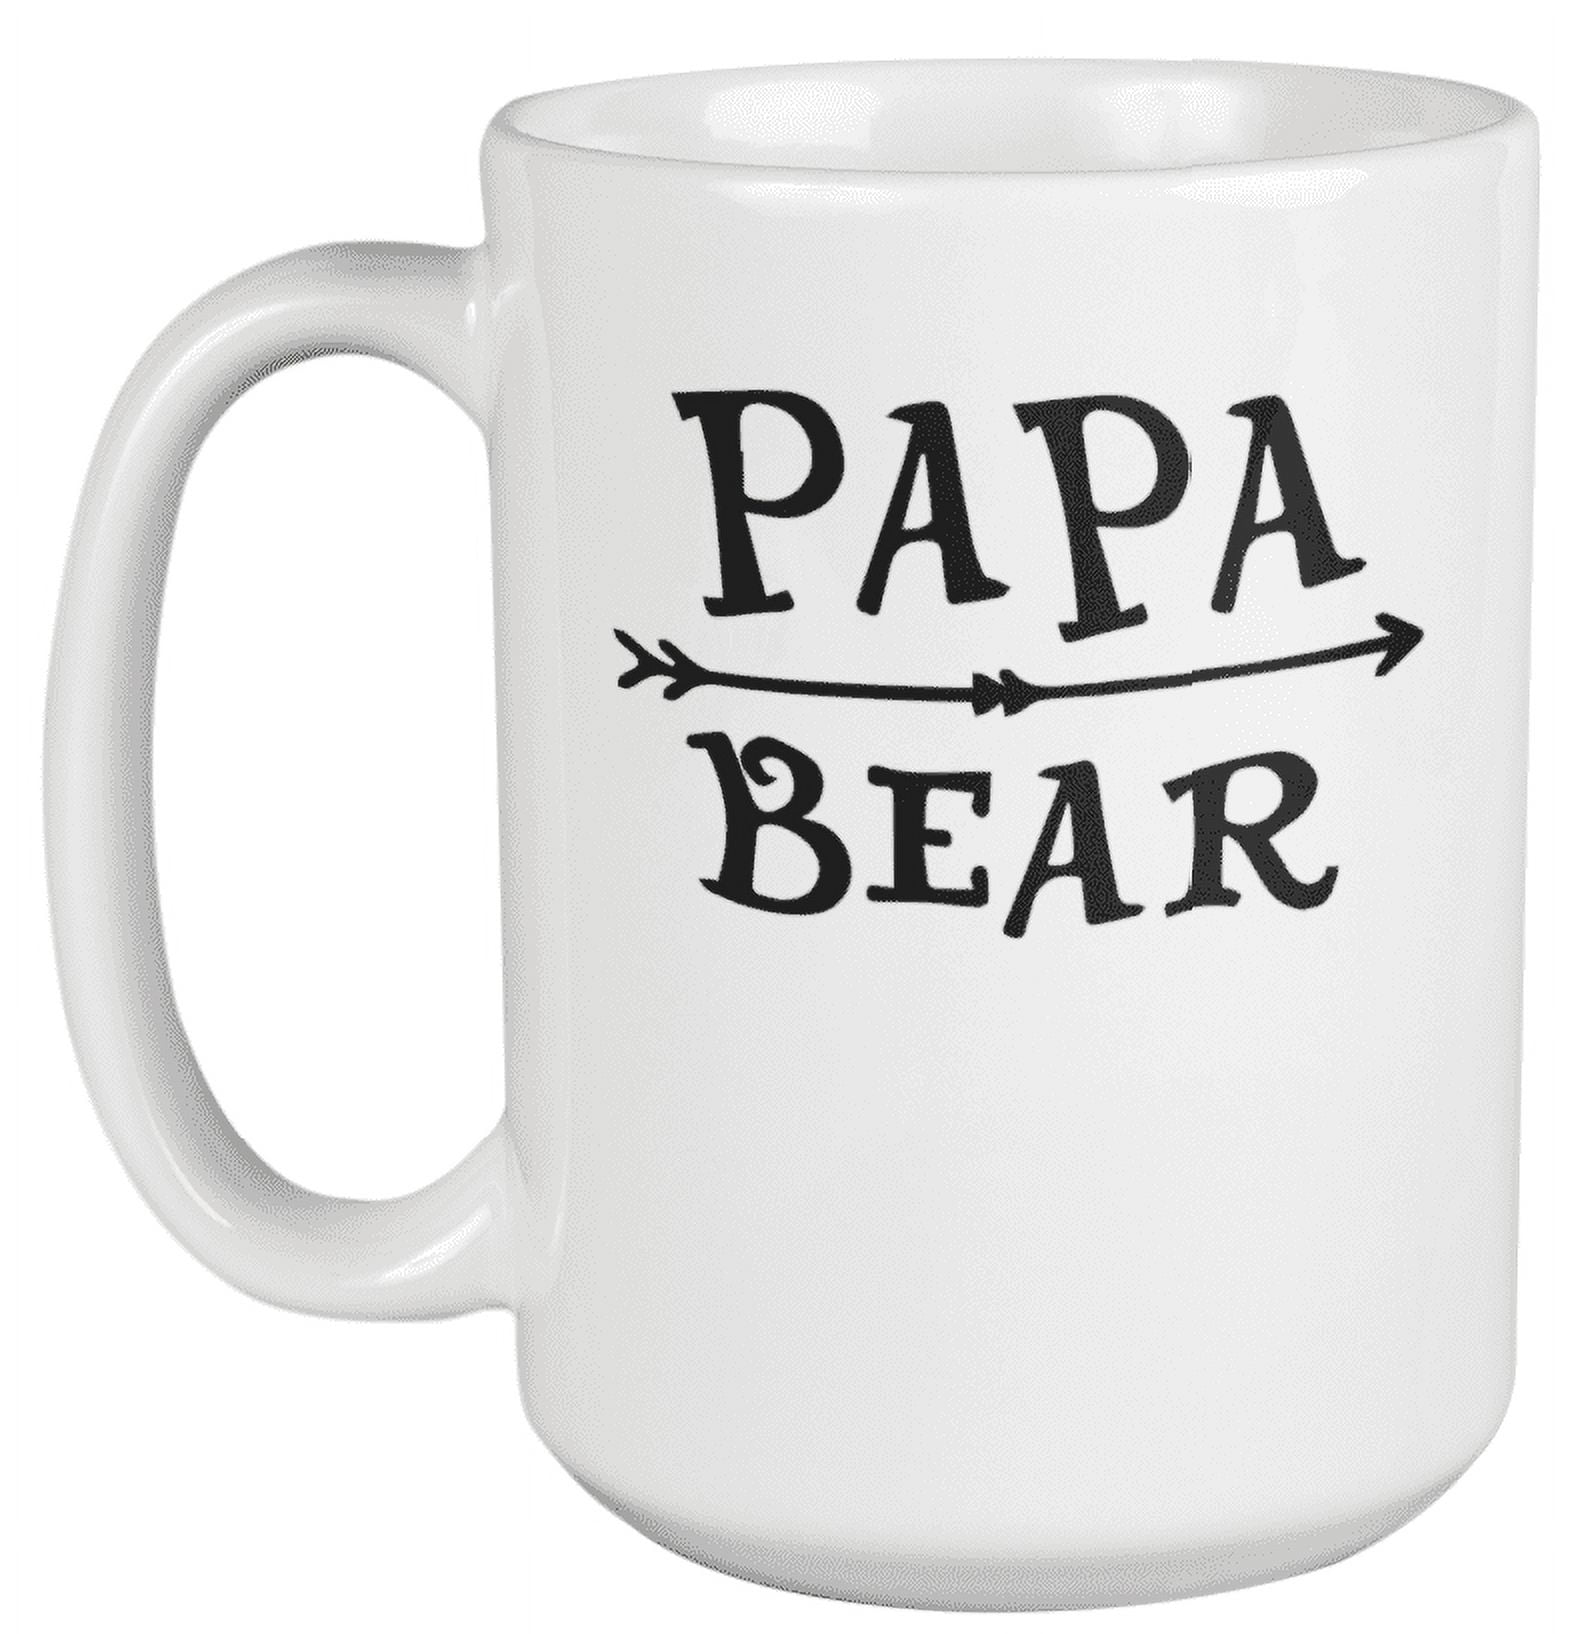  Coffee Club Papa Bear Coffee Mug - Gift for Dad or Grandfather  - Large Campfire Ceramic Mug - Heavy 15 Oz Black - : Home & Kitchen